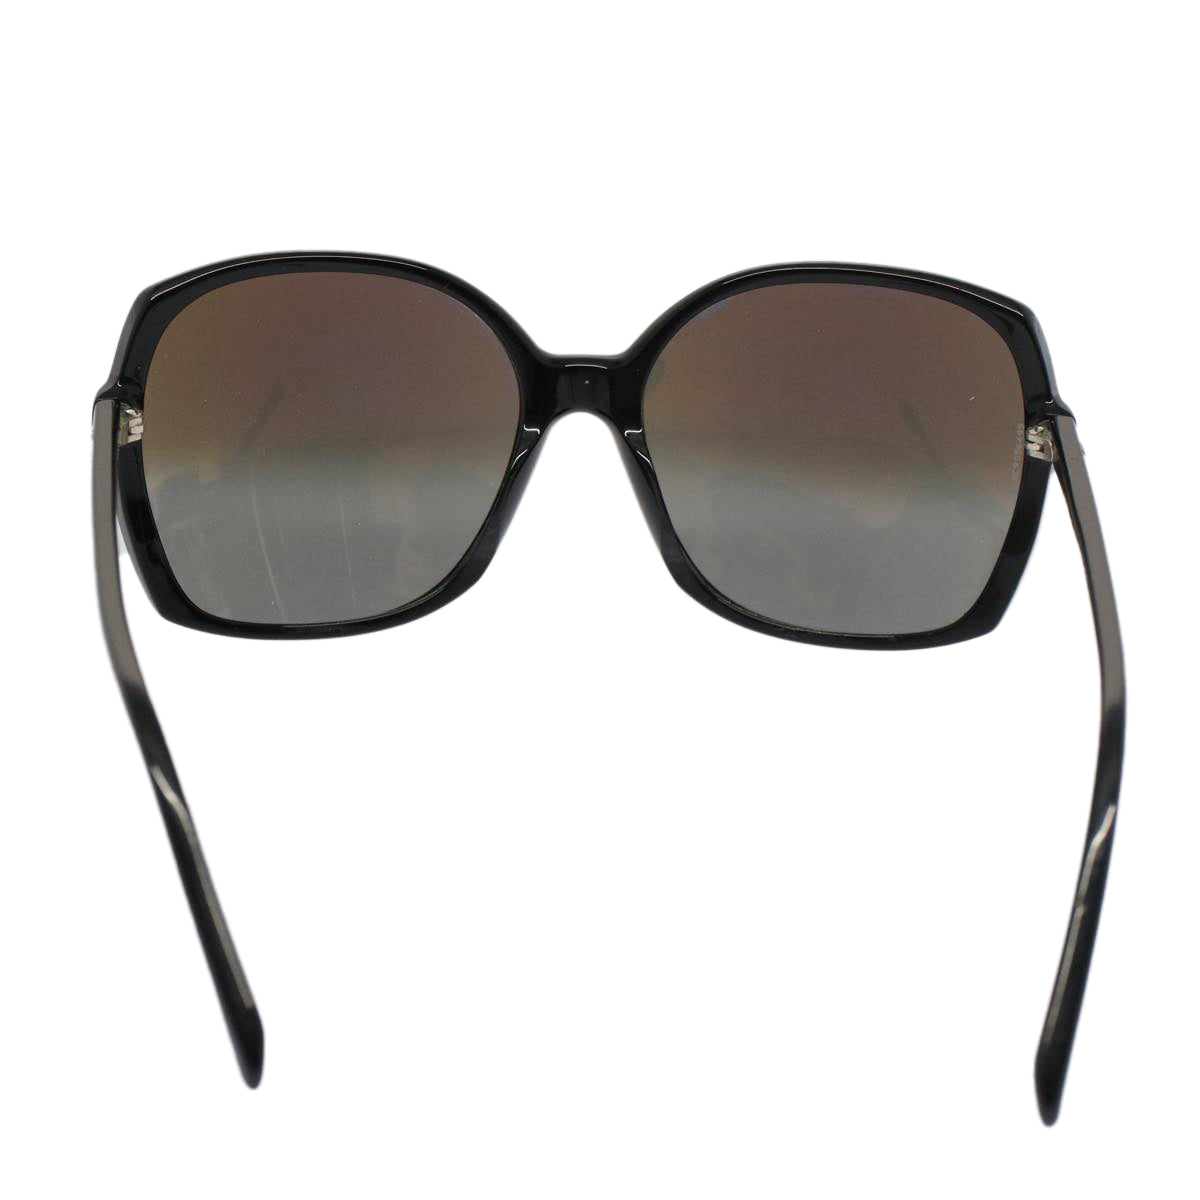 CHANEL Sunglasses Plastic Black CC Auth 53402